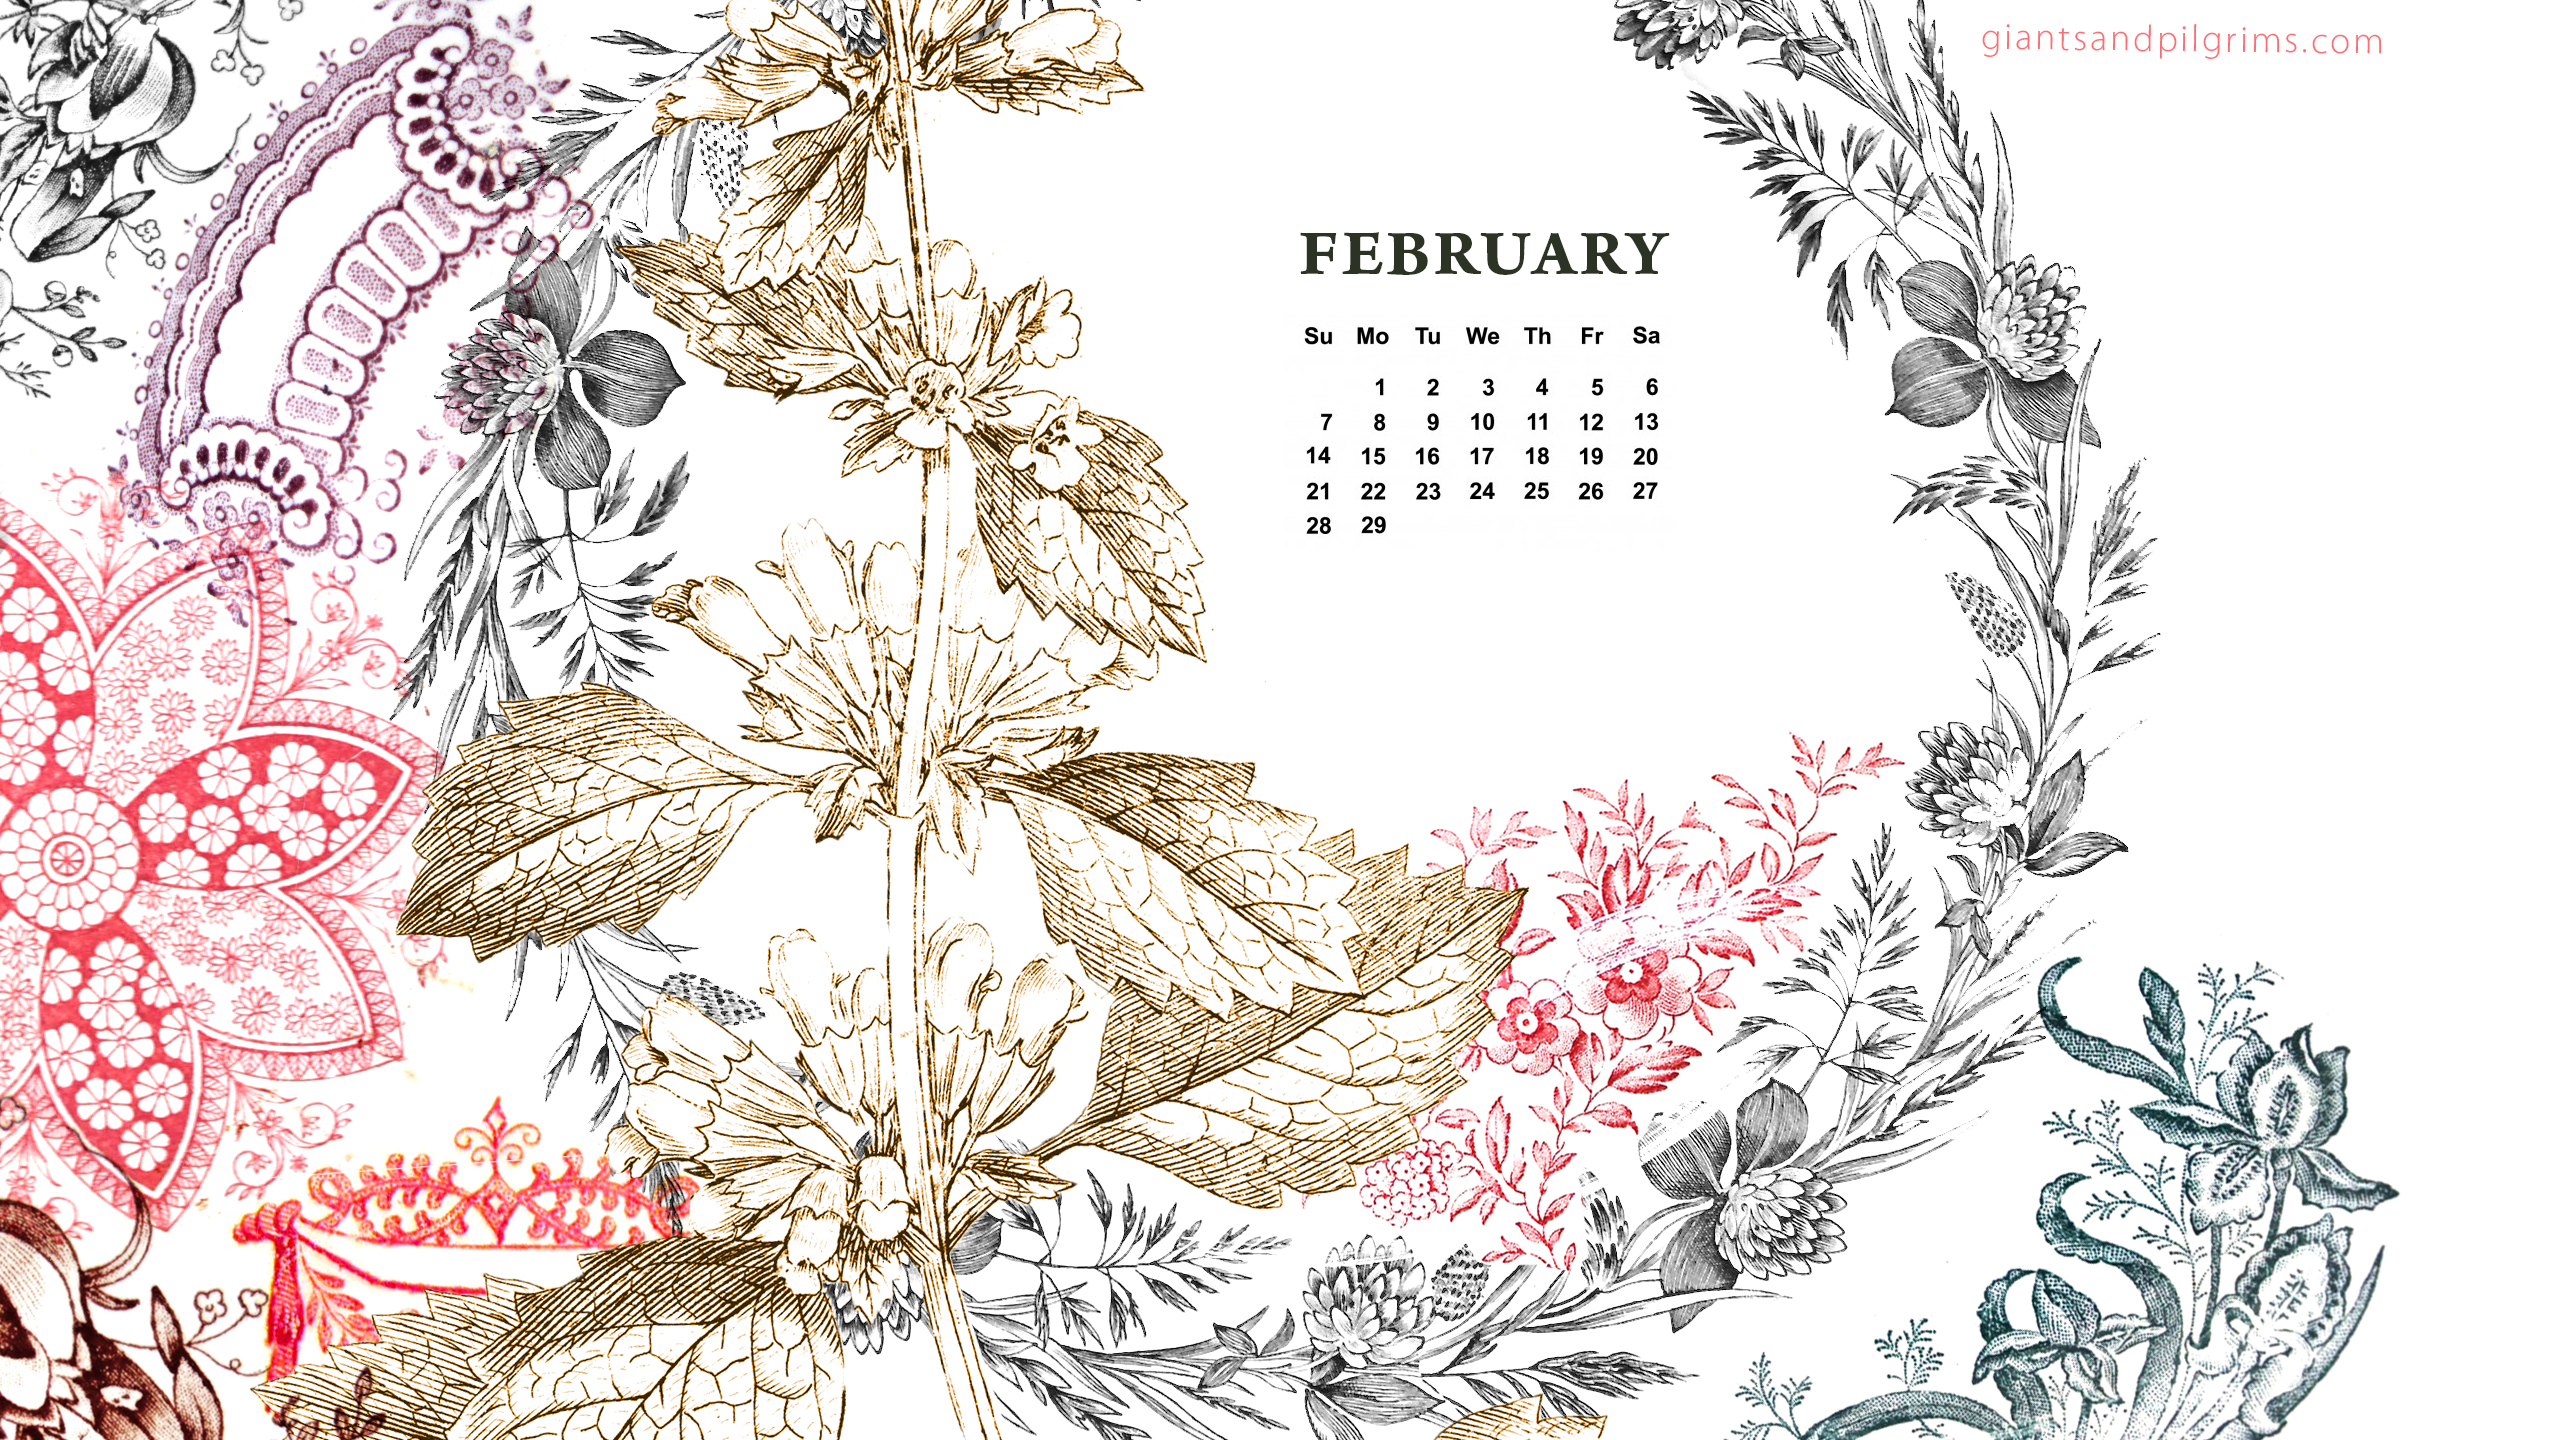 Giants & Pilgrims | February Free Calendar Desktop and iPhone ...